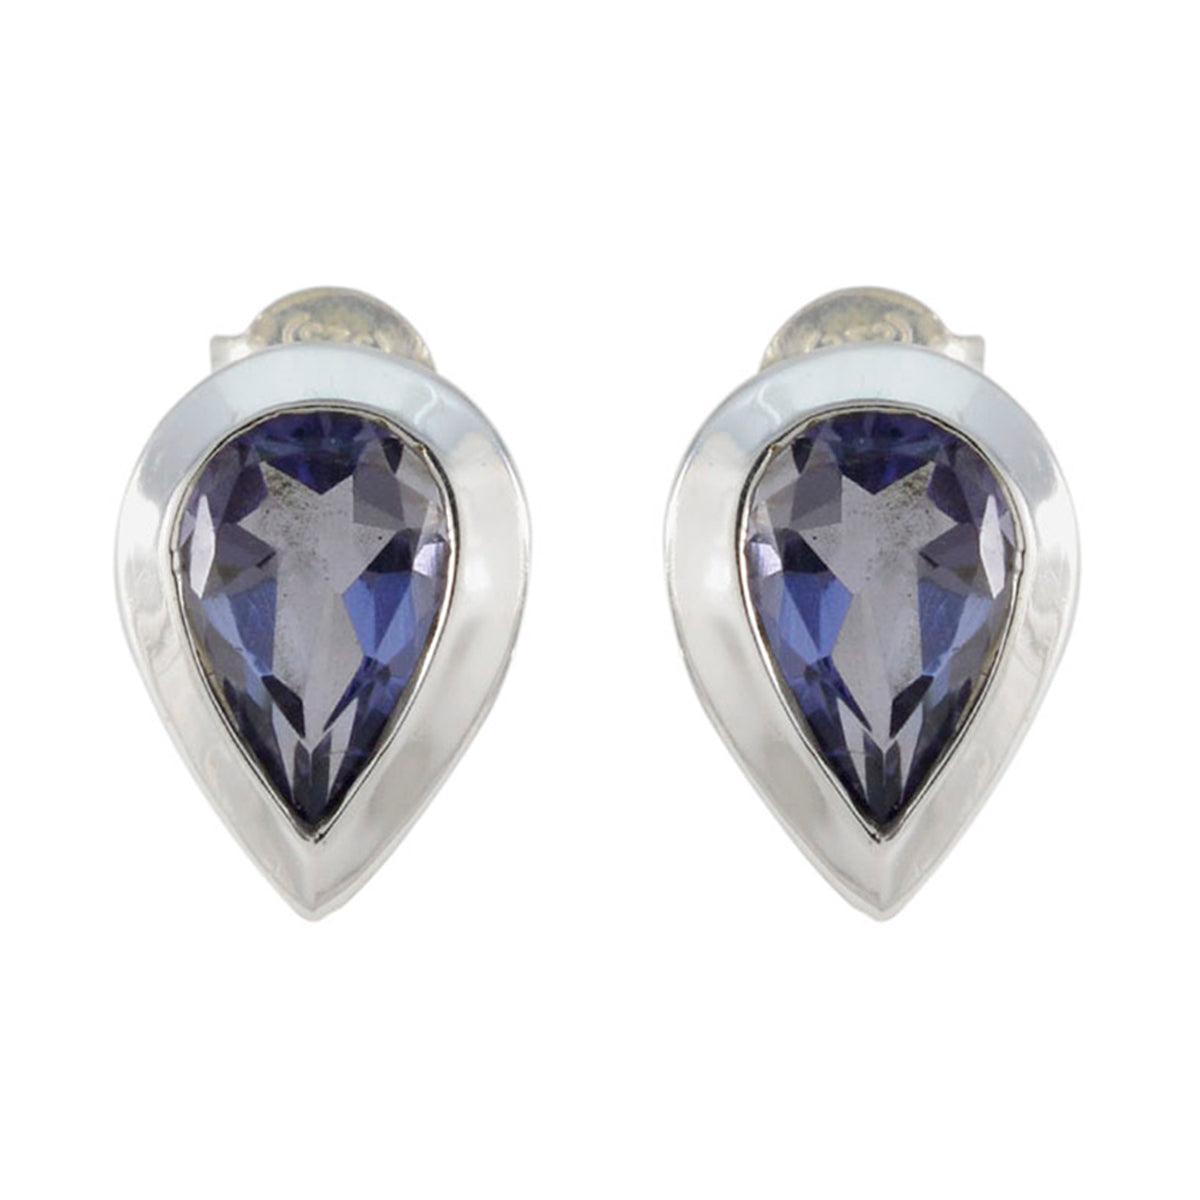 Riyo Fanciable Sterling Silber Ohrring für Damen, Iolith-Ohrring, Lünettenfassung, blauer Ohrring, Ohrstecker